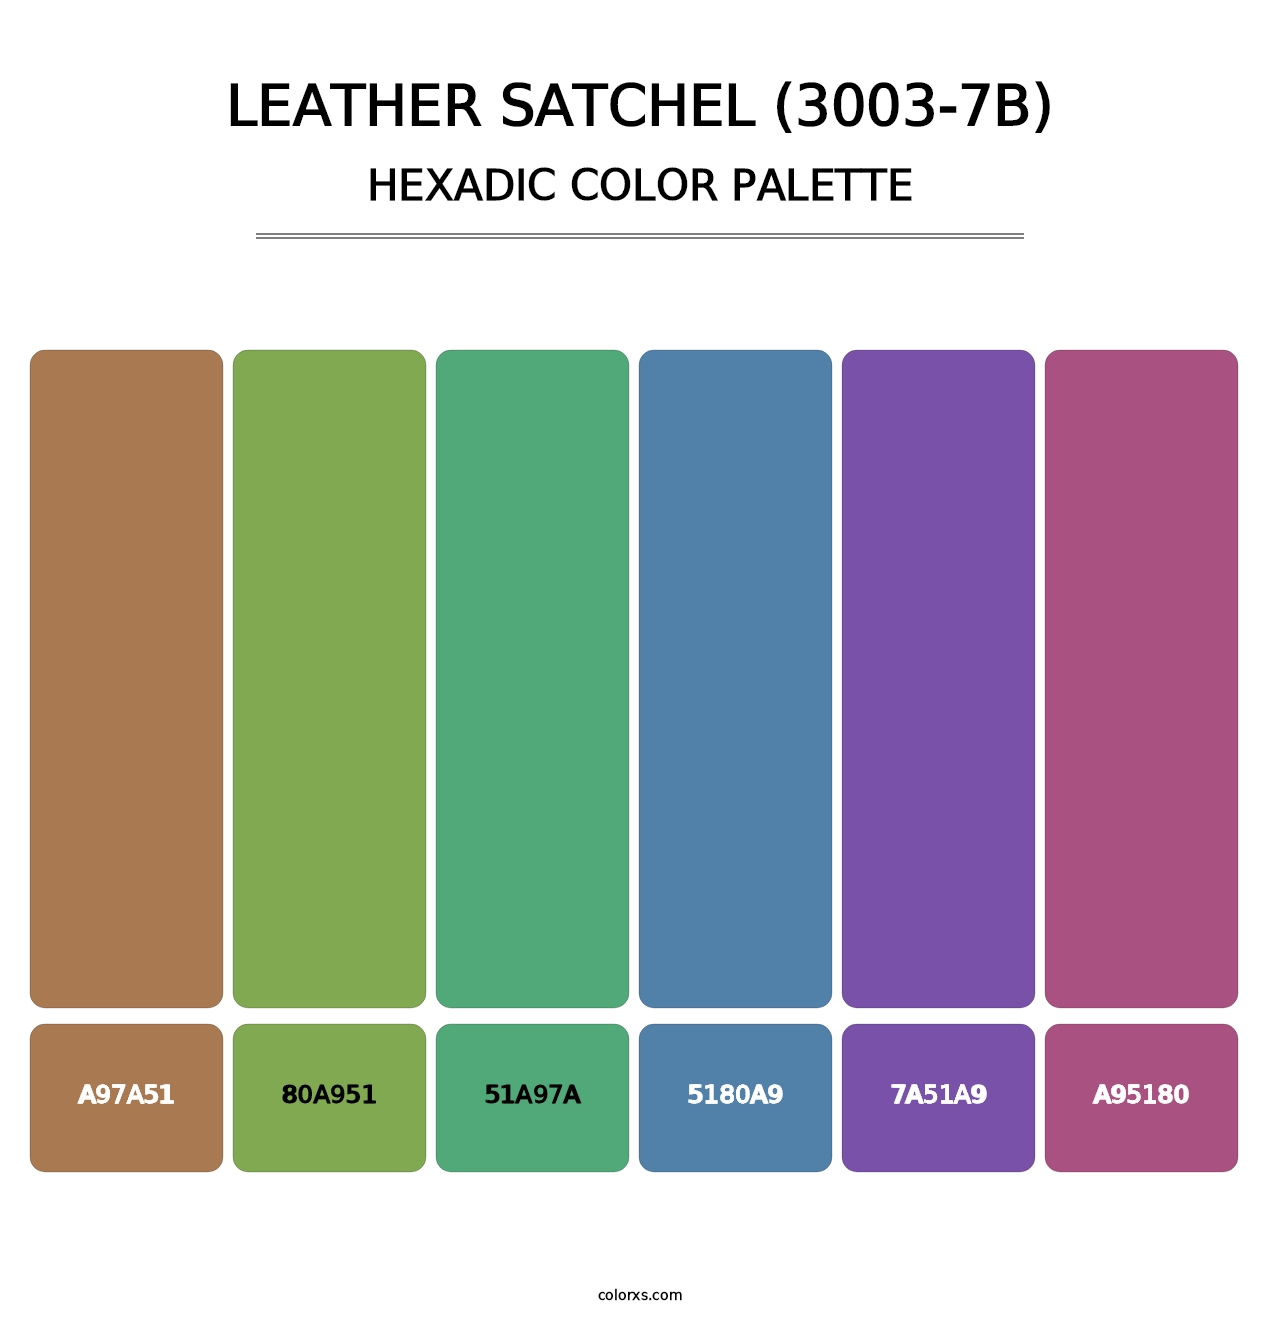 Leather Satchel (3003-7B) - Hexadic Color Palette